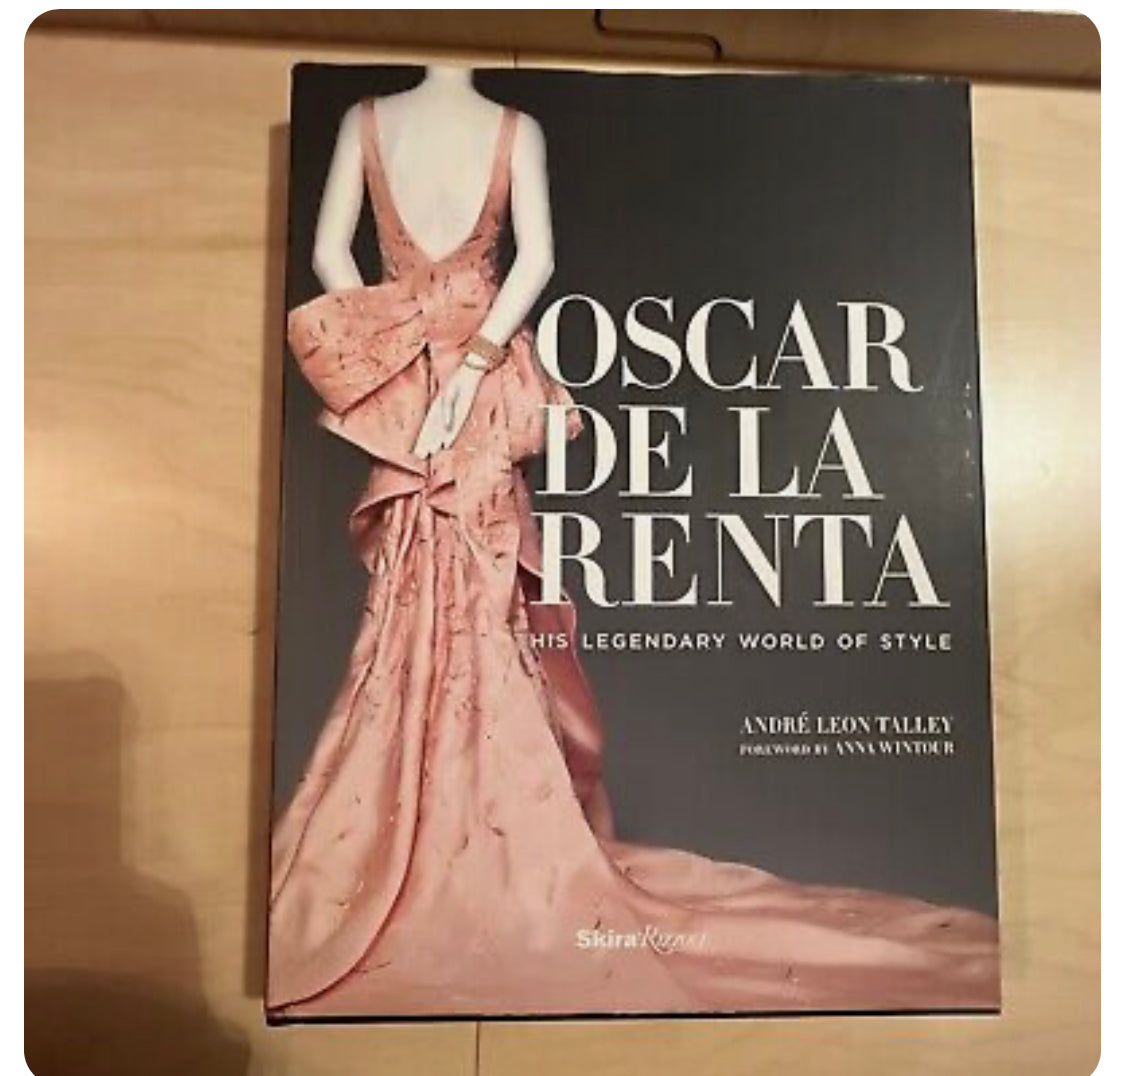 Hourglass gown by Oscar De la Renta cover of fashion book @recessla